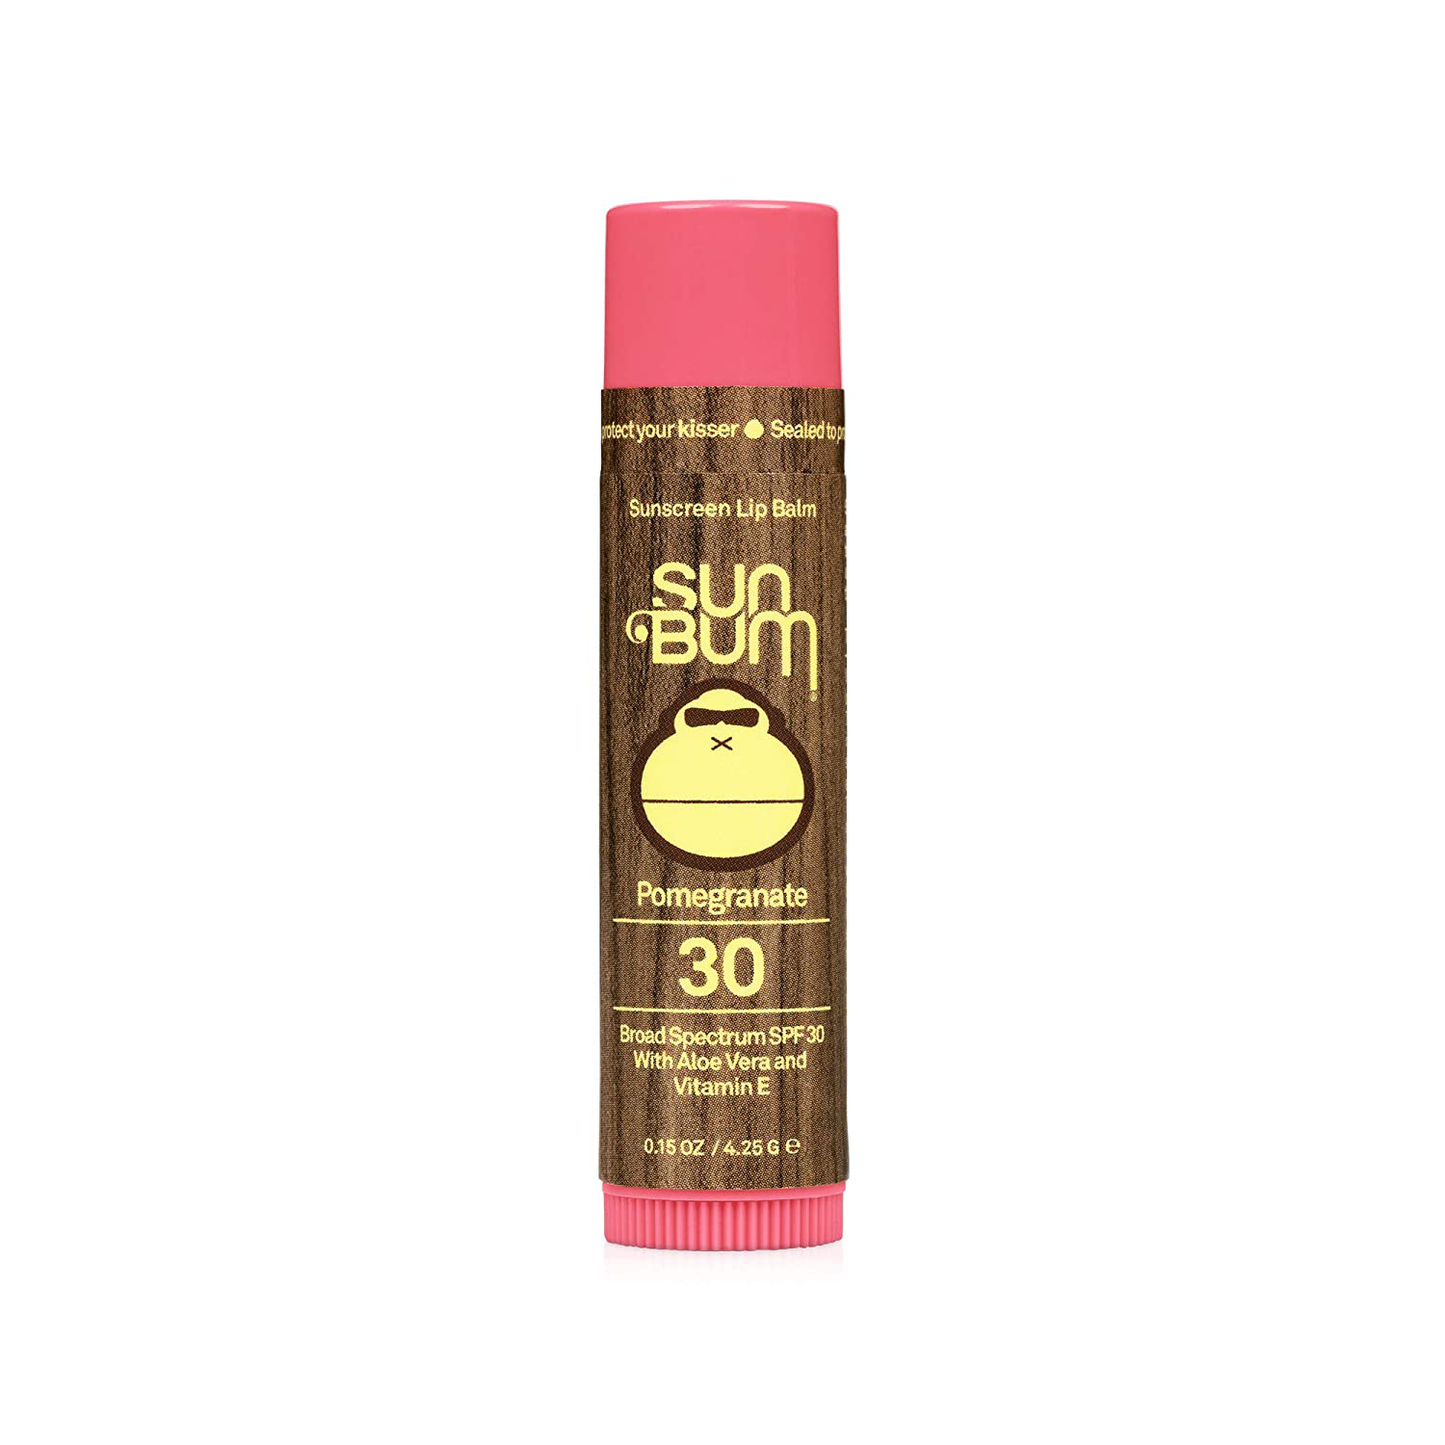 Sun Bum SPF 30 Sunscreen Lip Balm | Vegan and Cruelty Free Broad Spectrum UVA/UVB Lip Care with Aloe and Vitamin E for Moisturized Lips | Variety Pack |.15 Oz